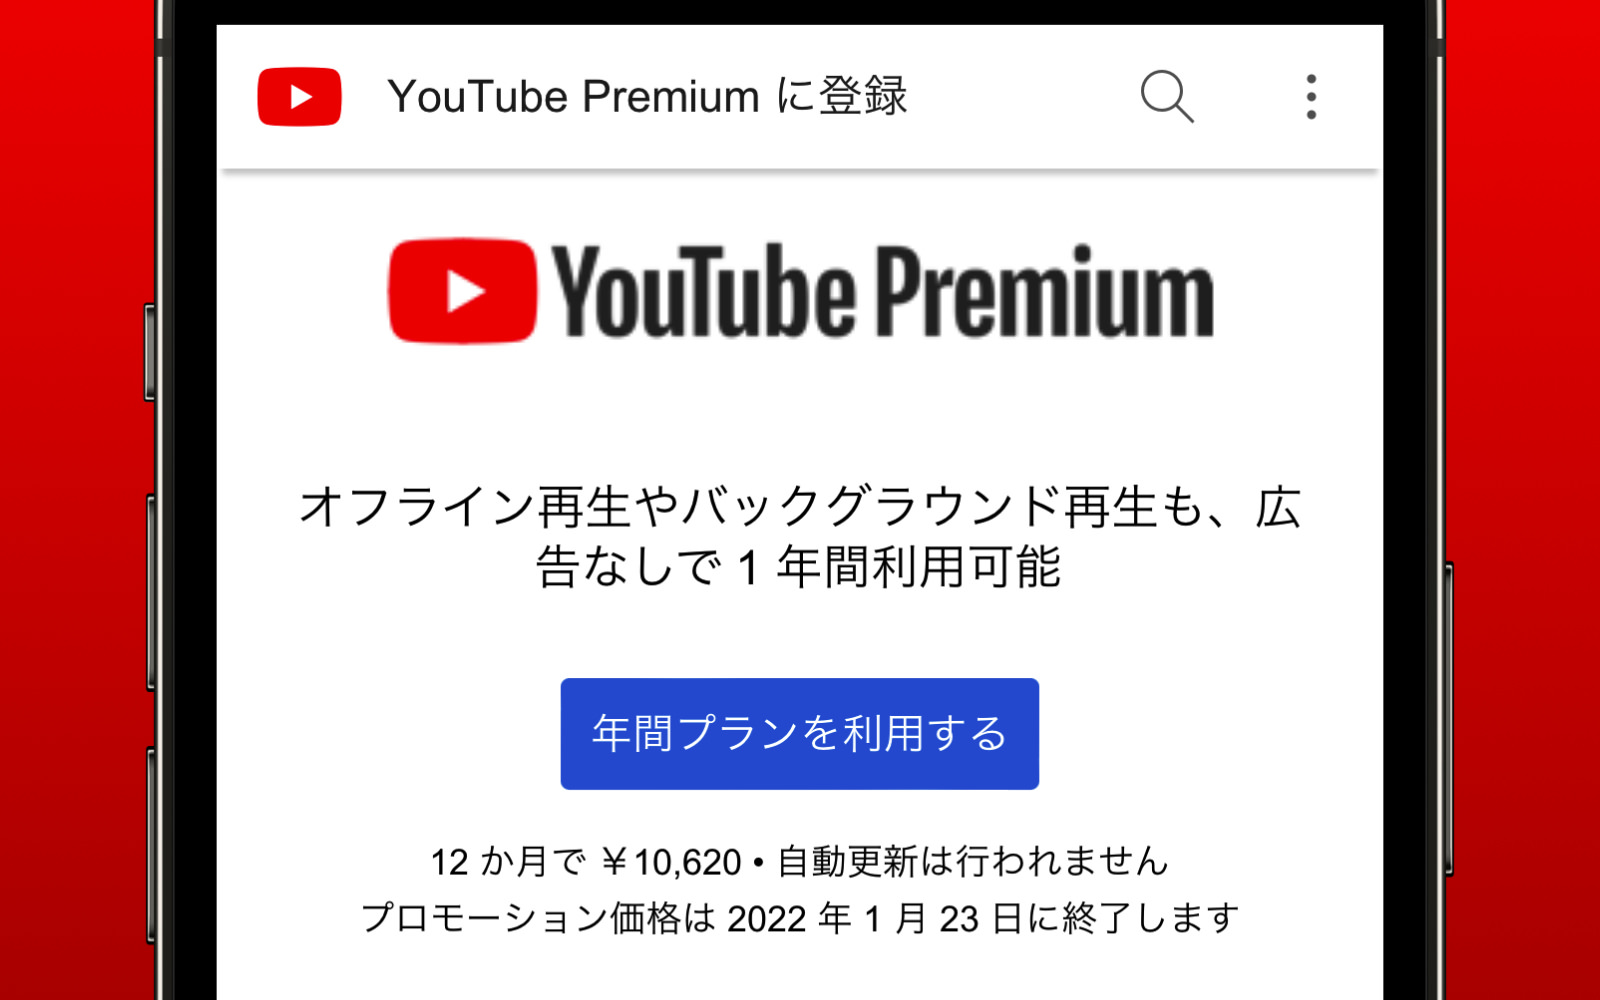 YouTube Premium Annual Promotion